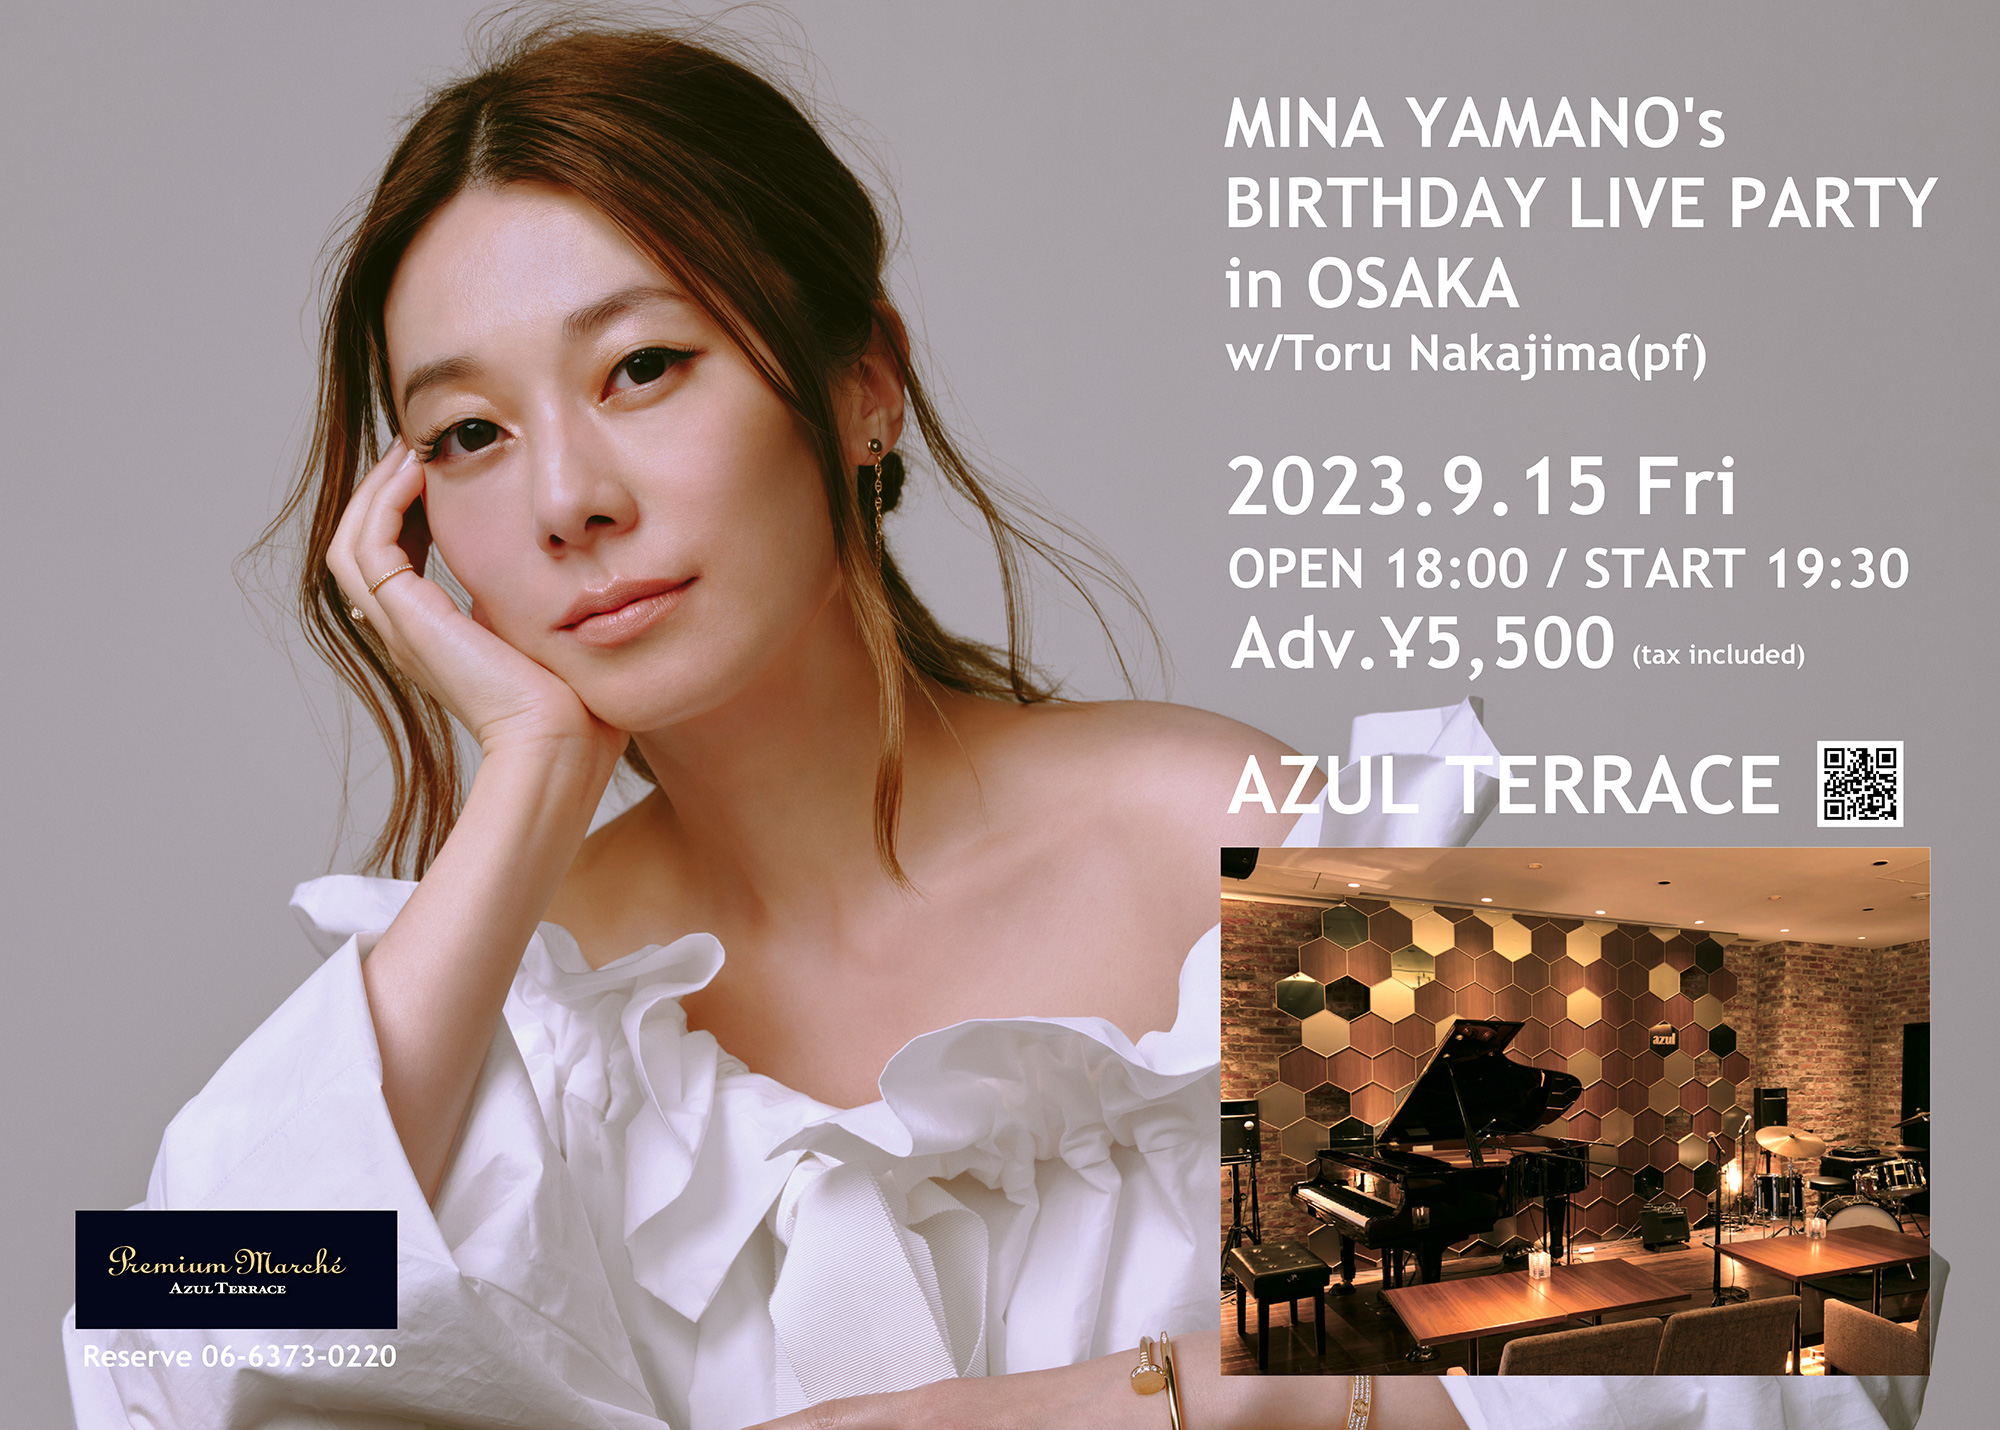 Concert de JAZZ Mina Yamano meets Tomotaka Hatano from Paris